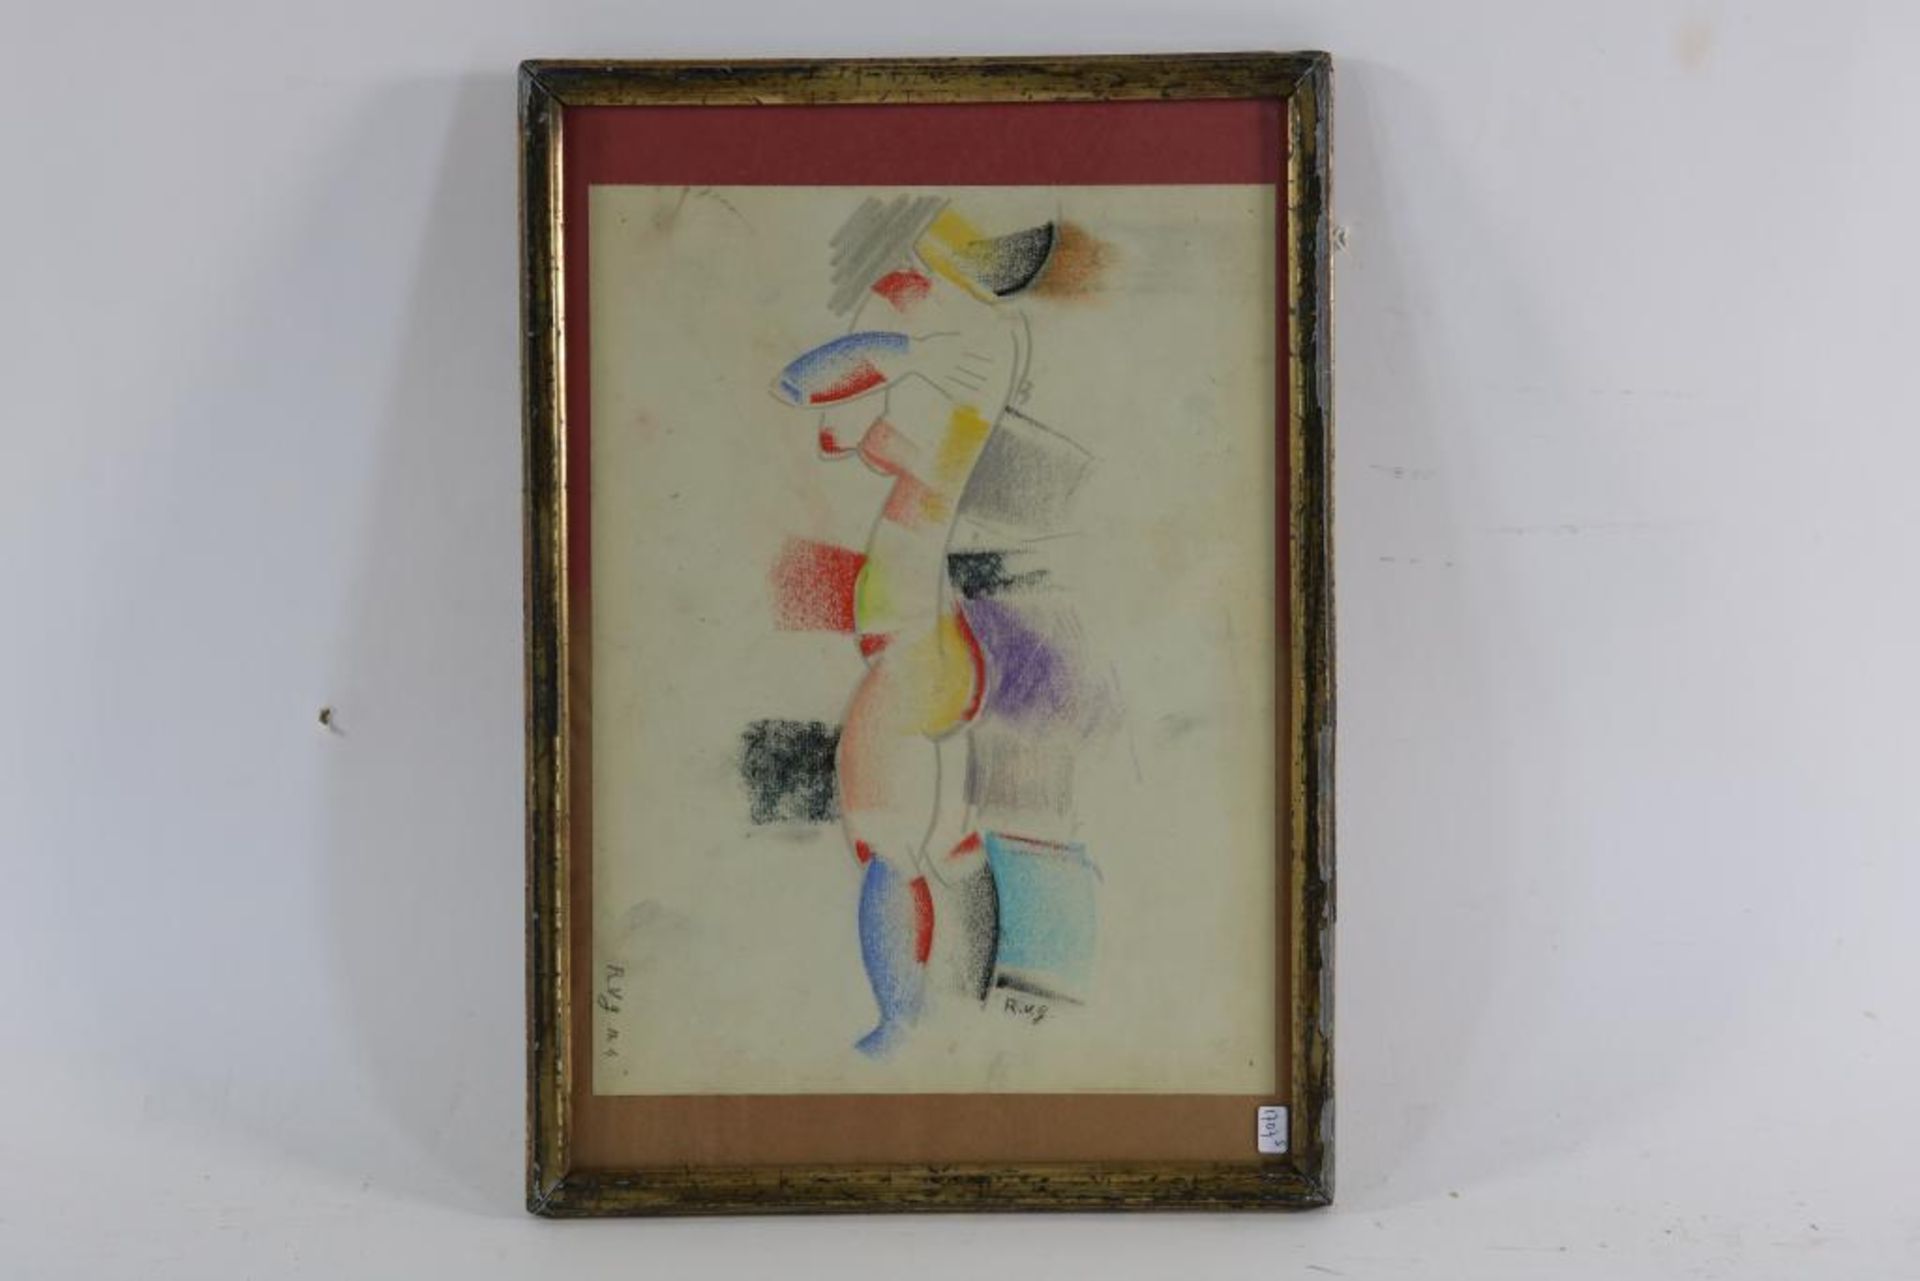 GINDERTAEL, ROGER VAN (1899-1982), monogrammed standing nude, colored pencil drawing 32 x 24 cm.